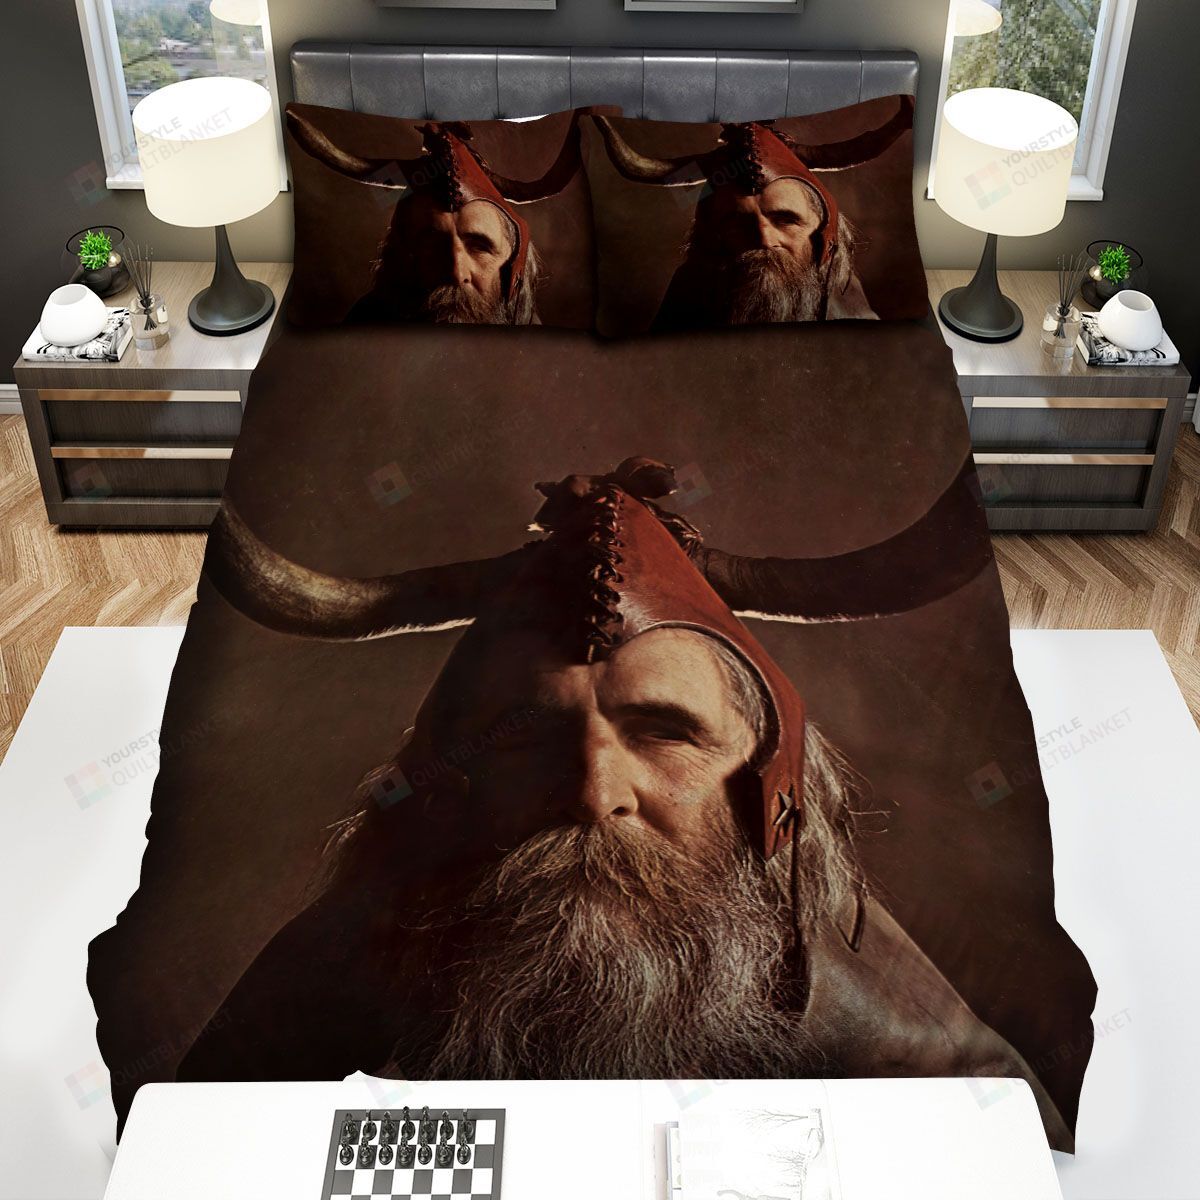 Moondog Moondog 2 Album Cover Bed Sheets Spread Comforter Duvet Cover Bedding Sets